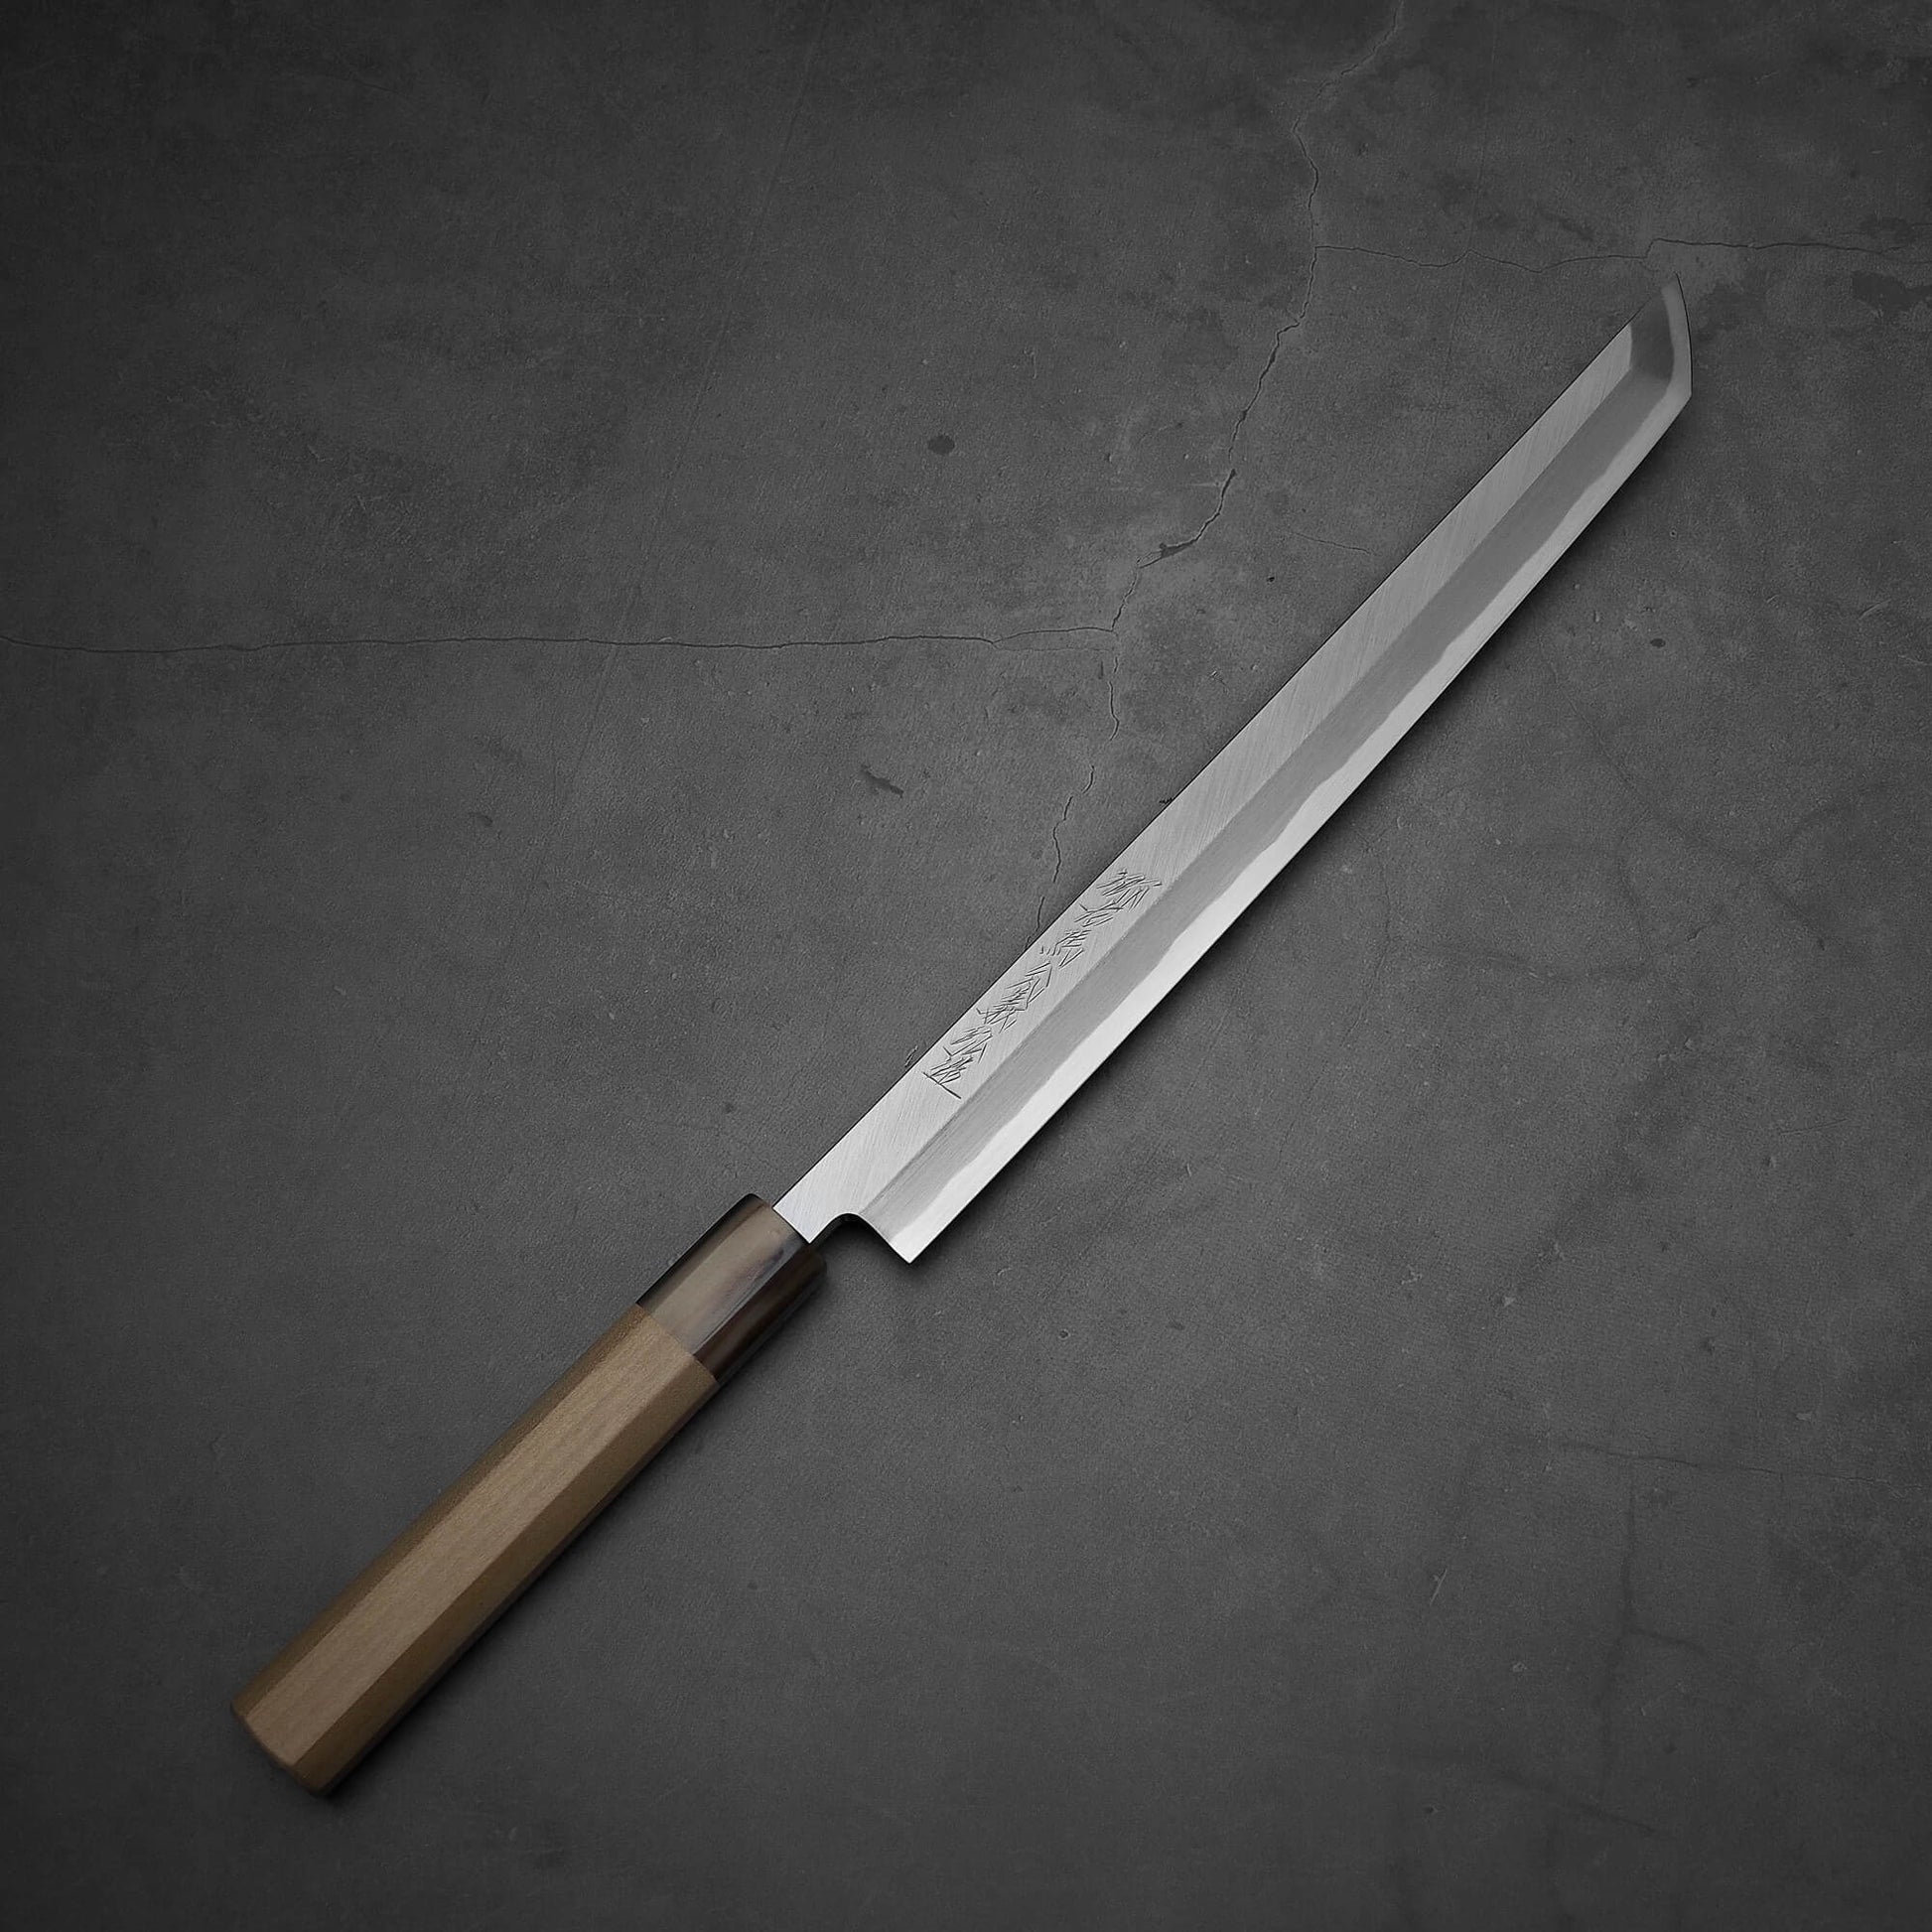 Top-down view of Yoshikazu Tanaka sakimaru takohiki knife with a hand-forged blade made of shirogami#2 steel.